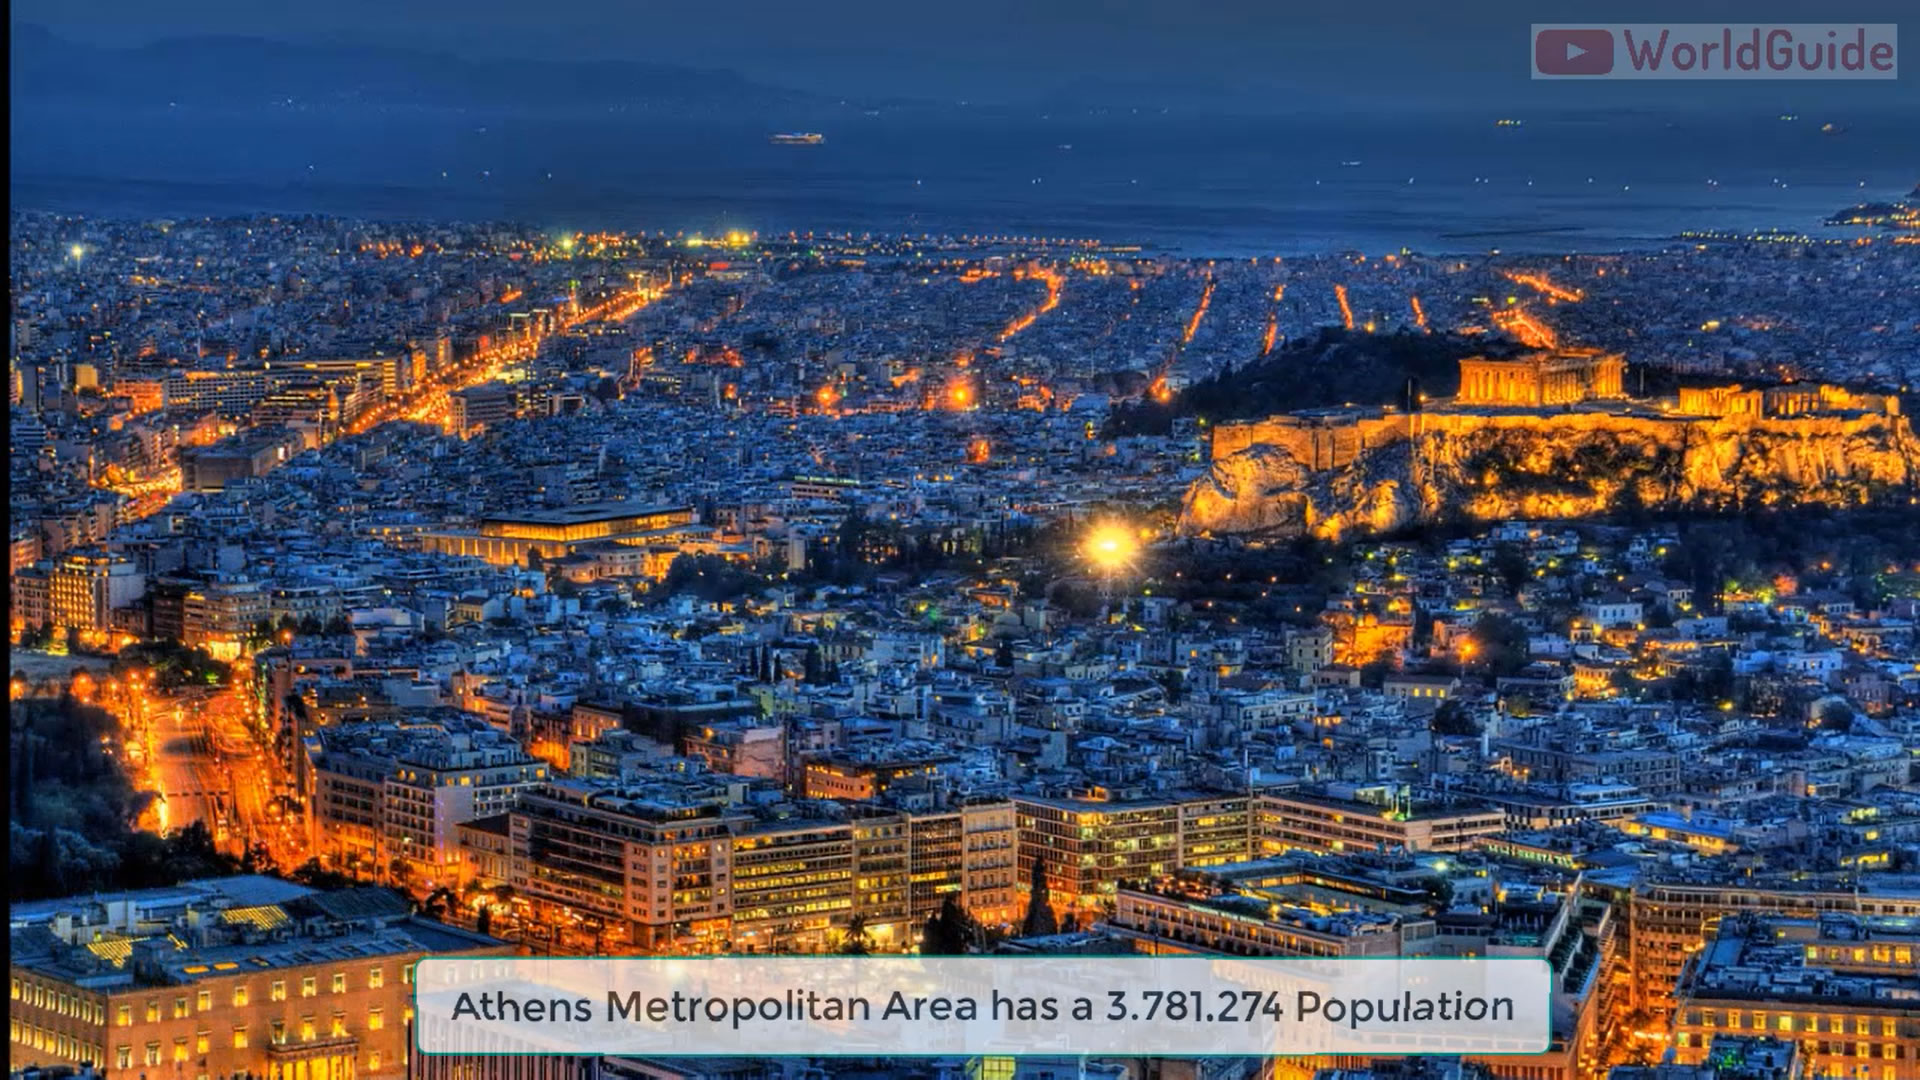 Athens Metropolitan Area has a 3.781.274 Population